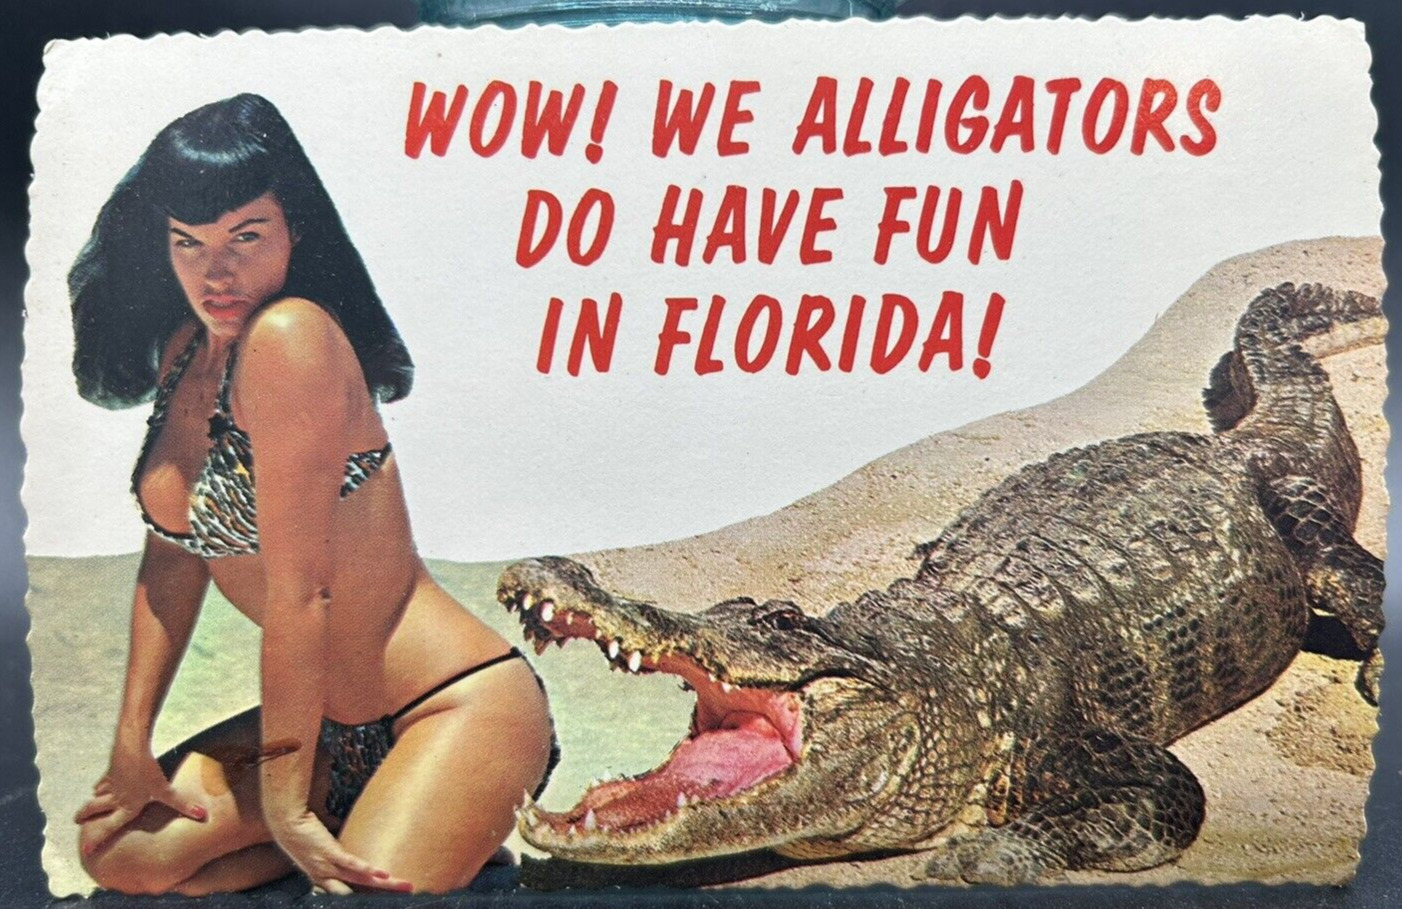 Vtg. Circa 1970s Bikini Woman & Alligator Risque Florida Postcard